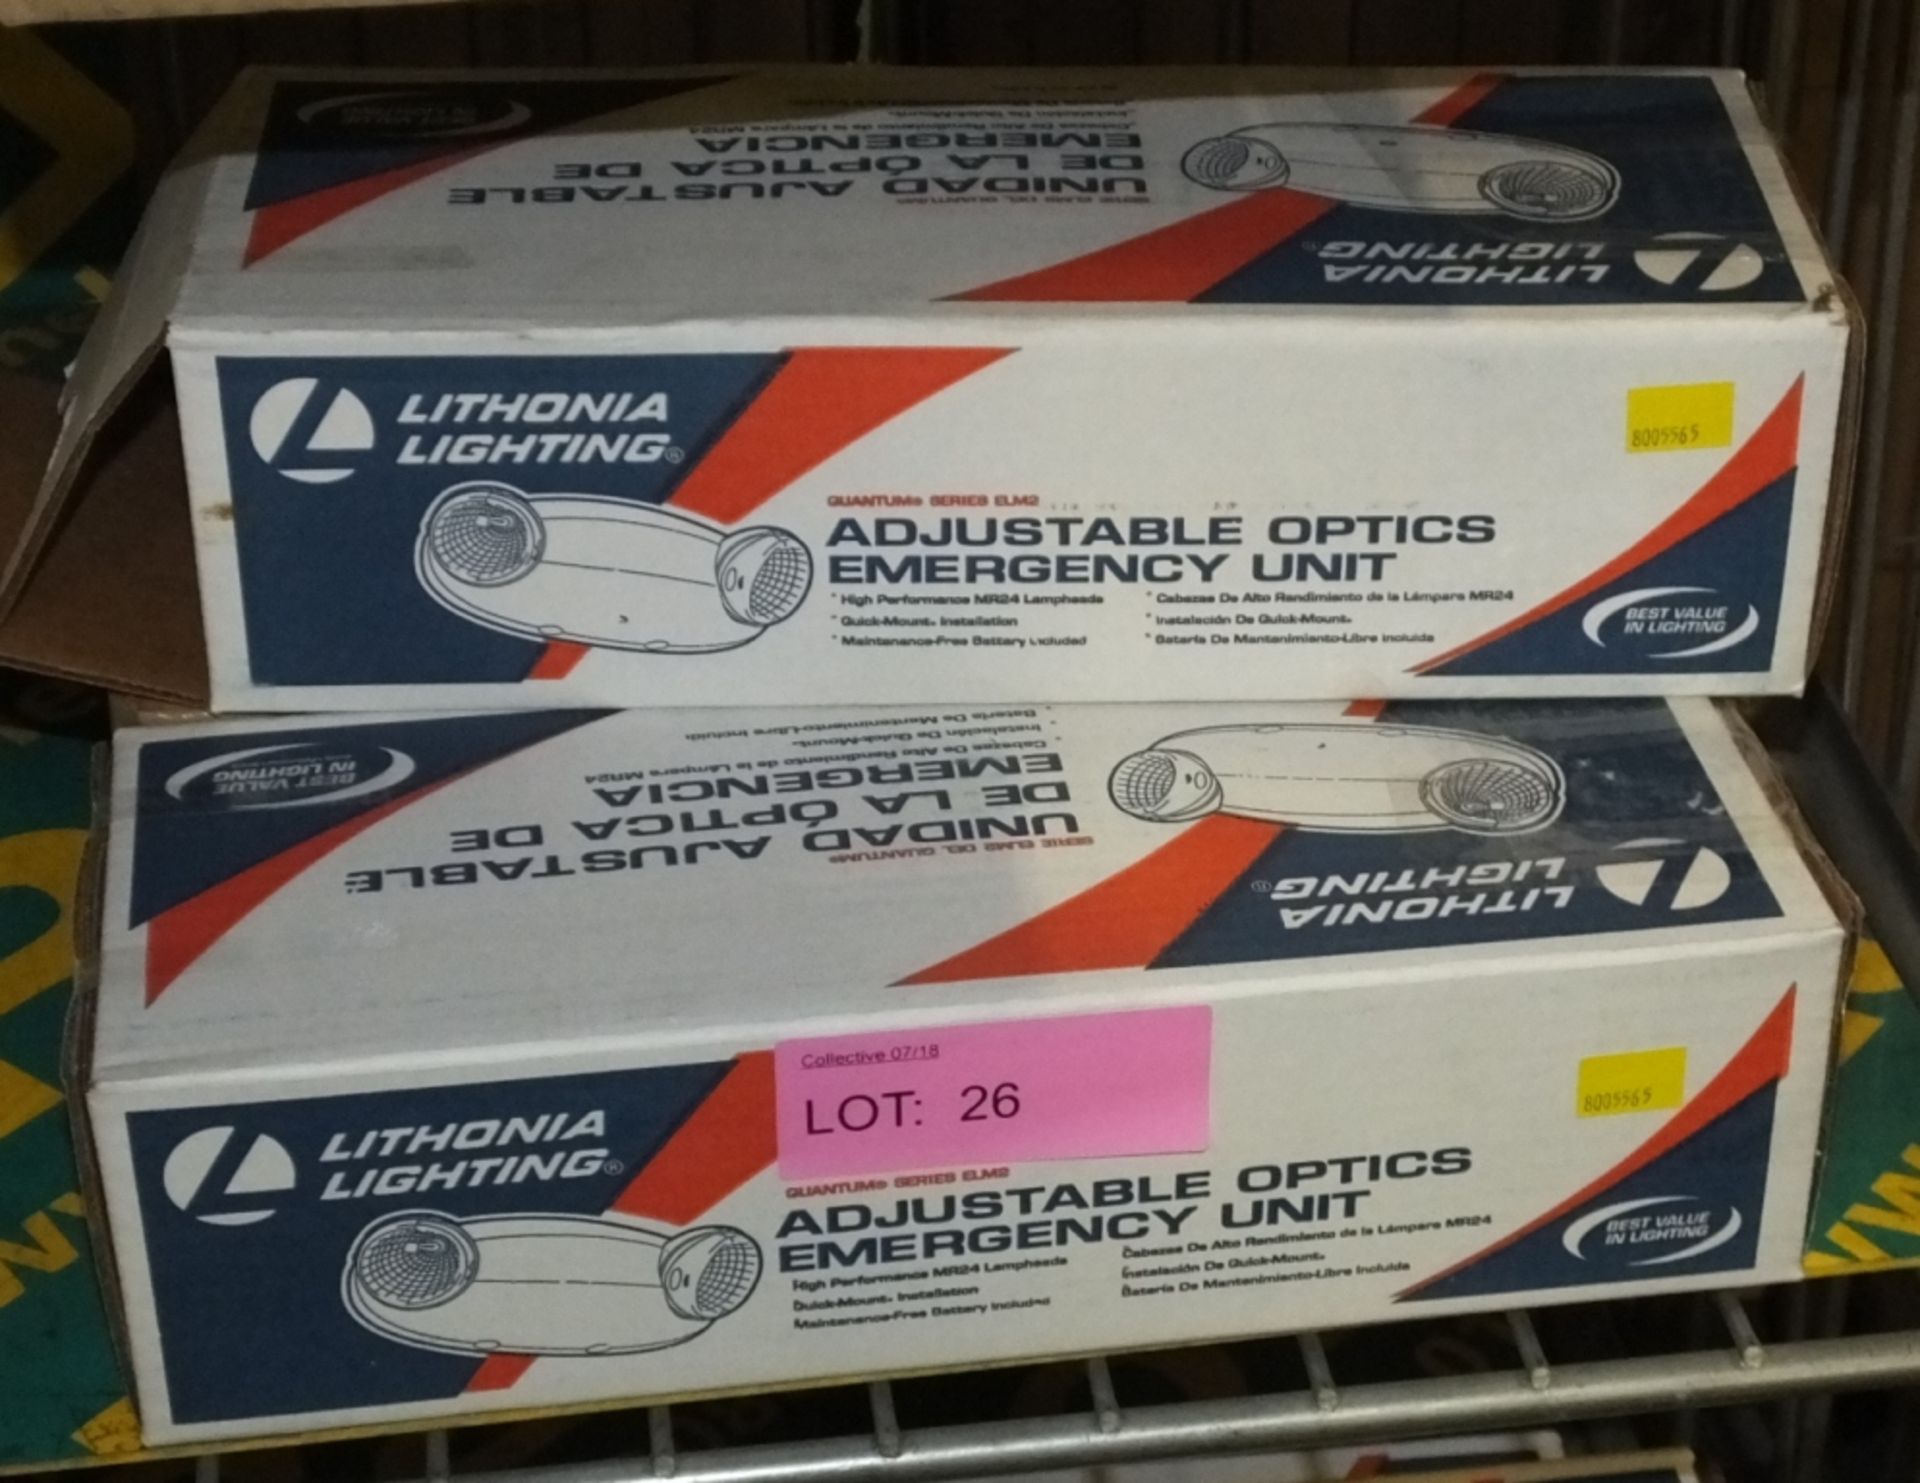 3x Lithonia Lighting Adjustable Optics Emergency LIghting units